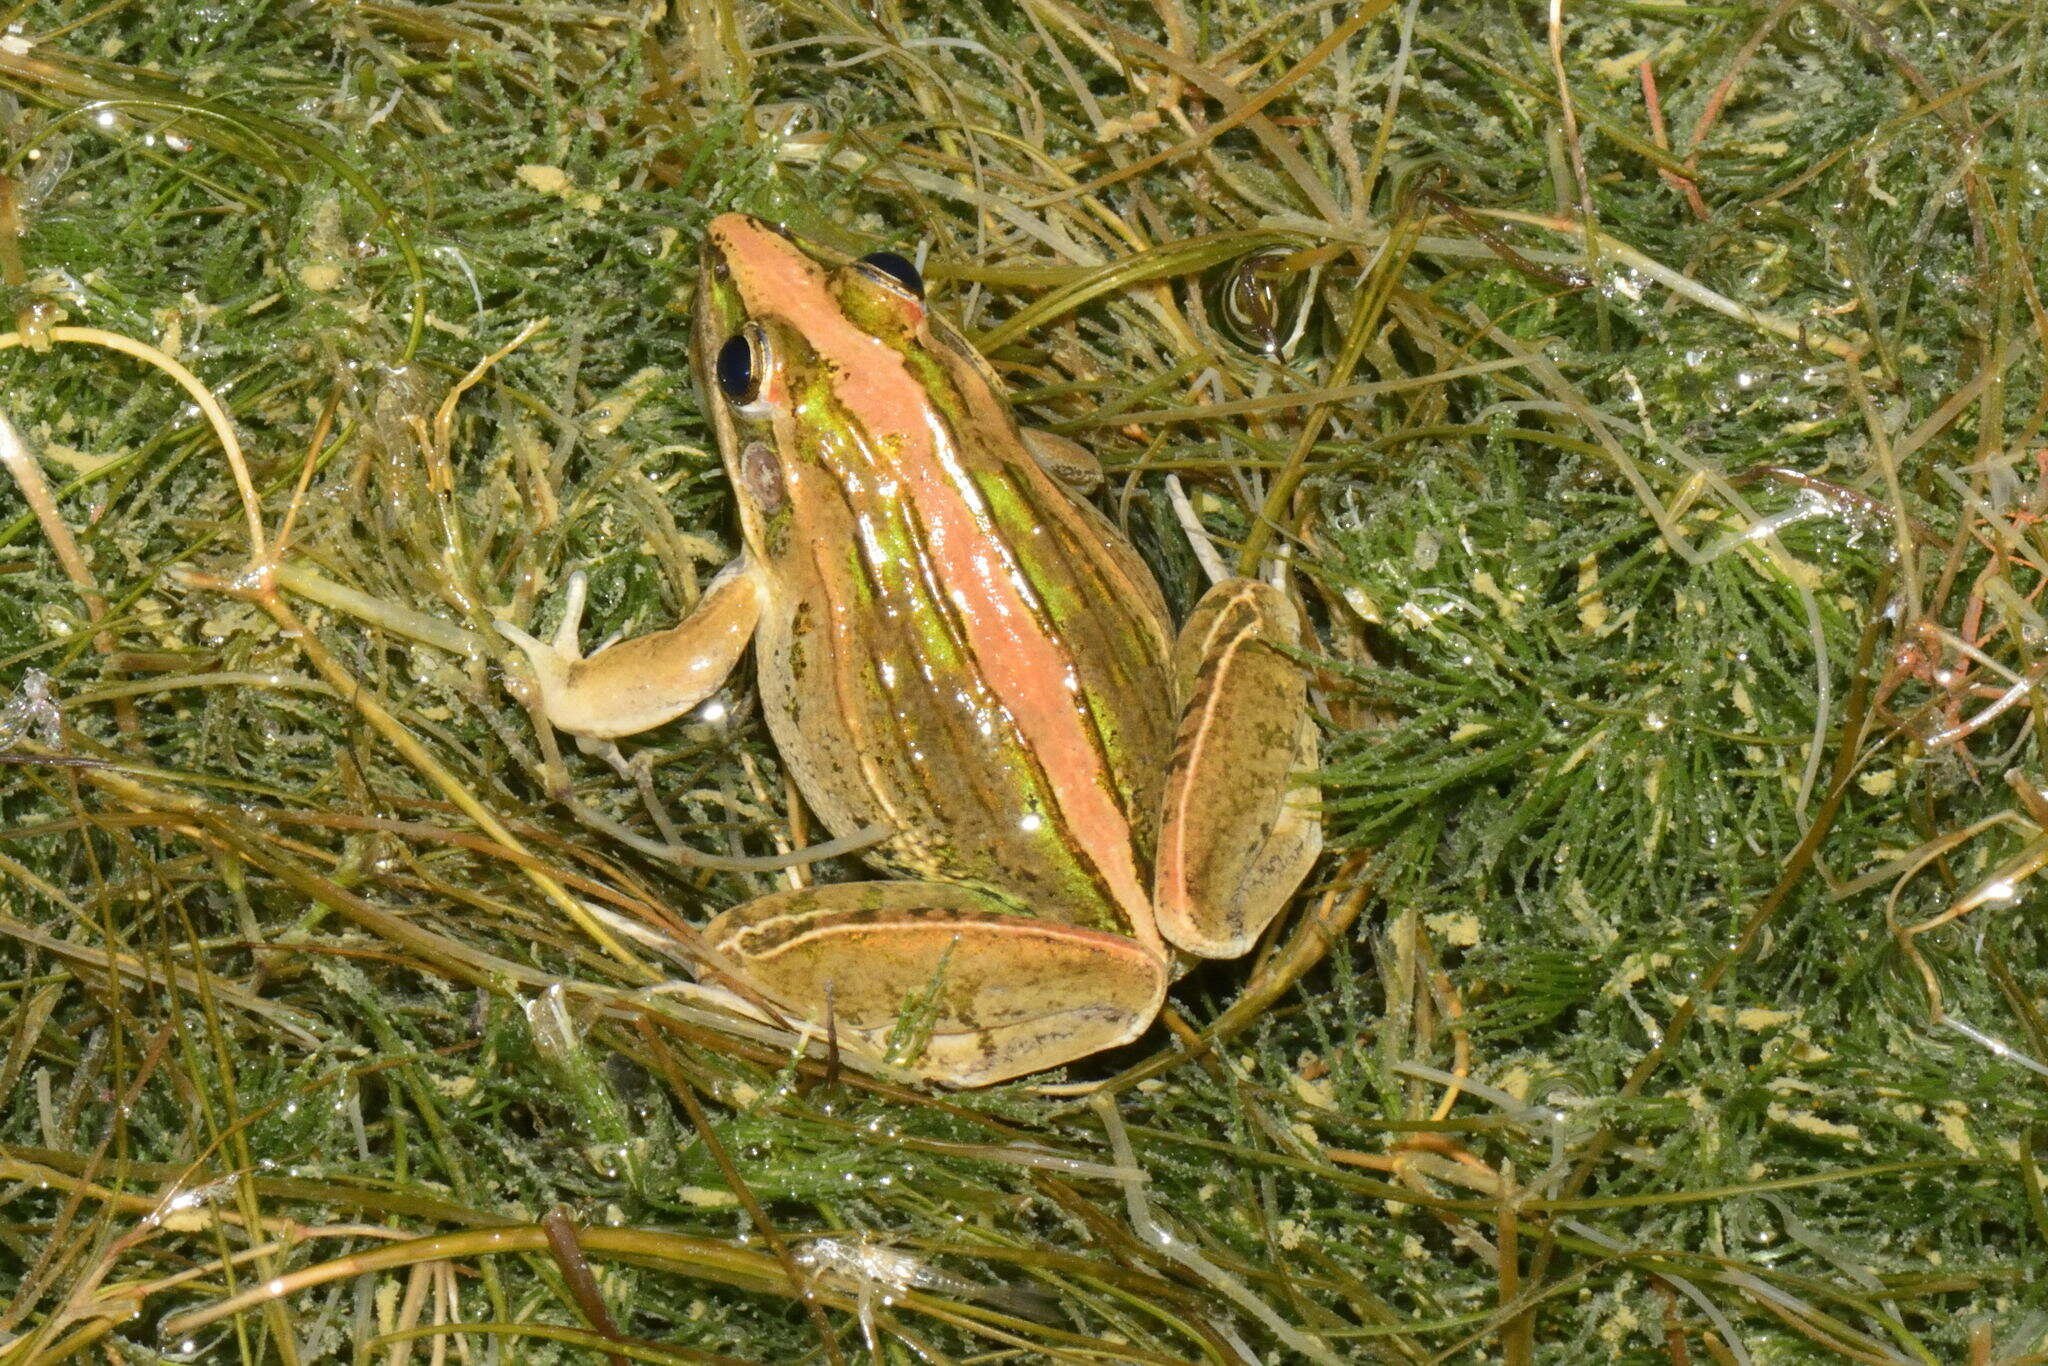 Image of Ptychadena nilotica (Seetzen 1855)